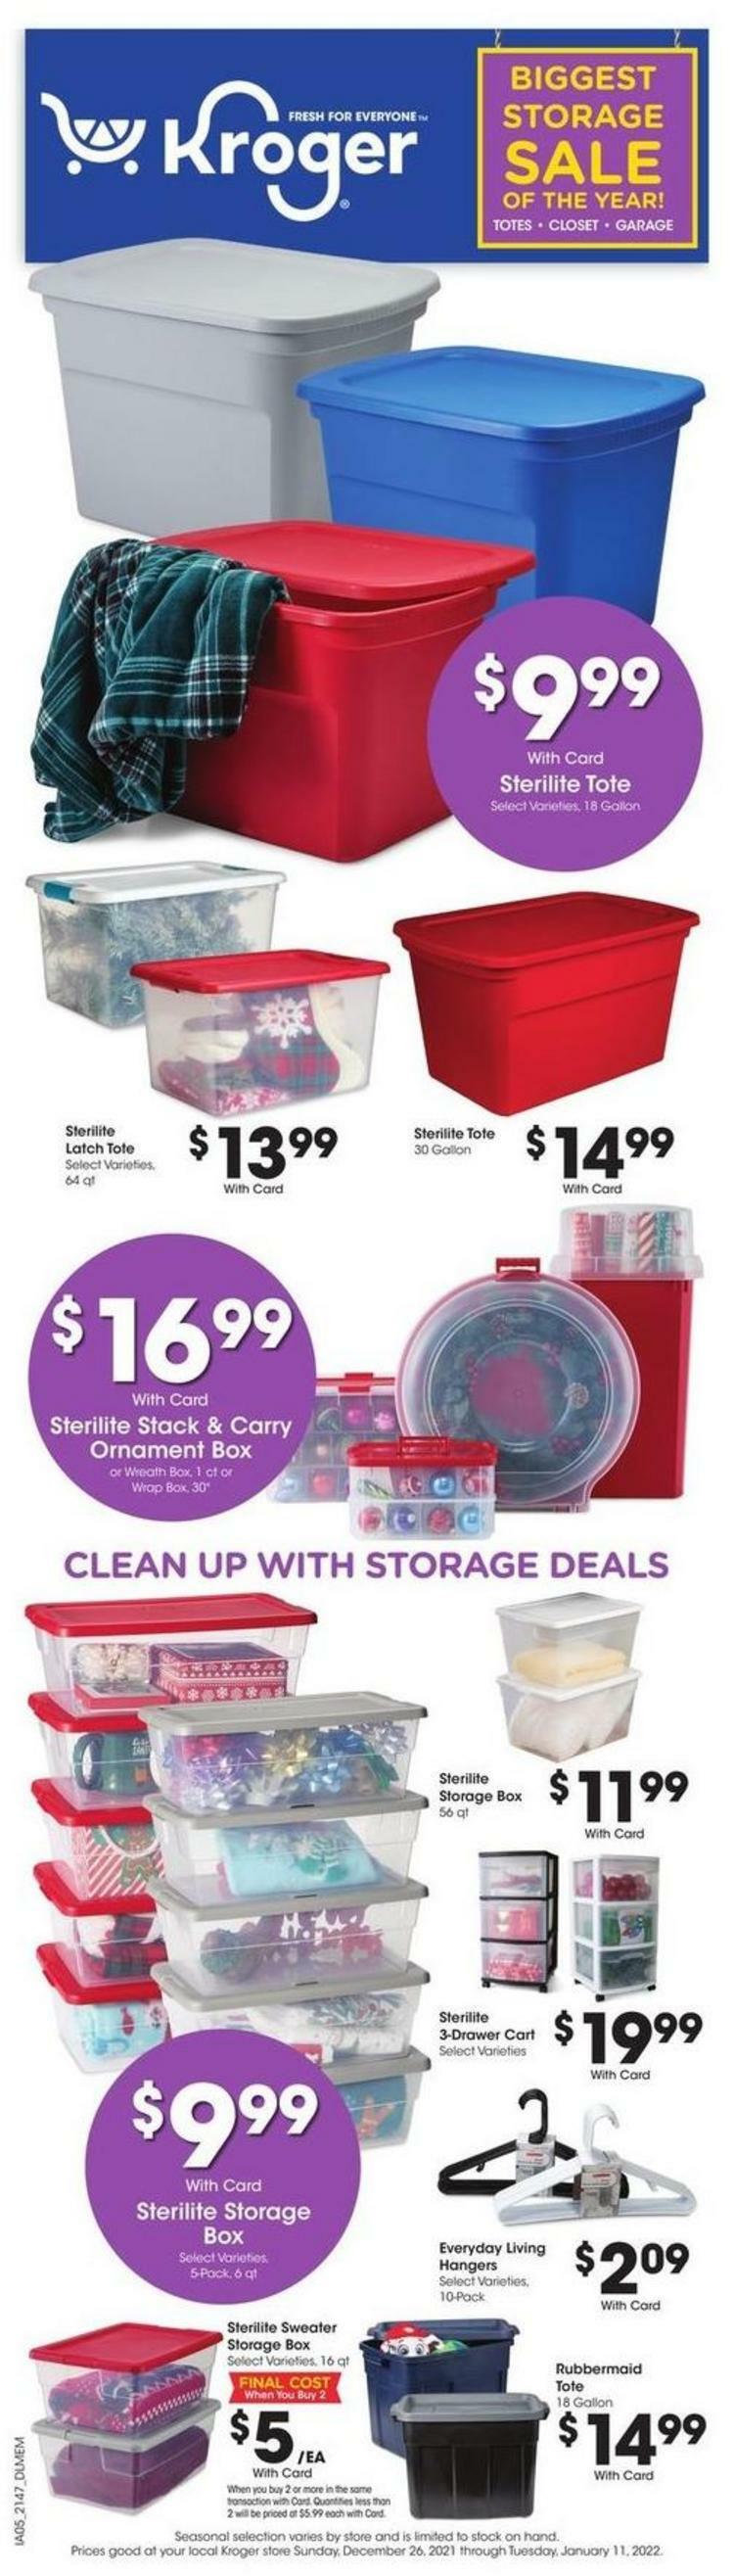 Kroger Storage Sale Weekly Ad from December 26